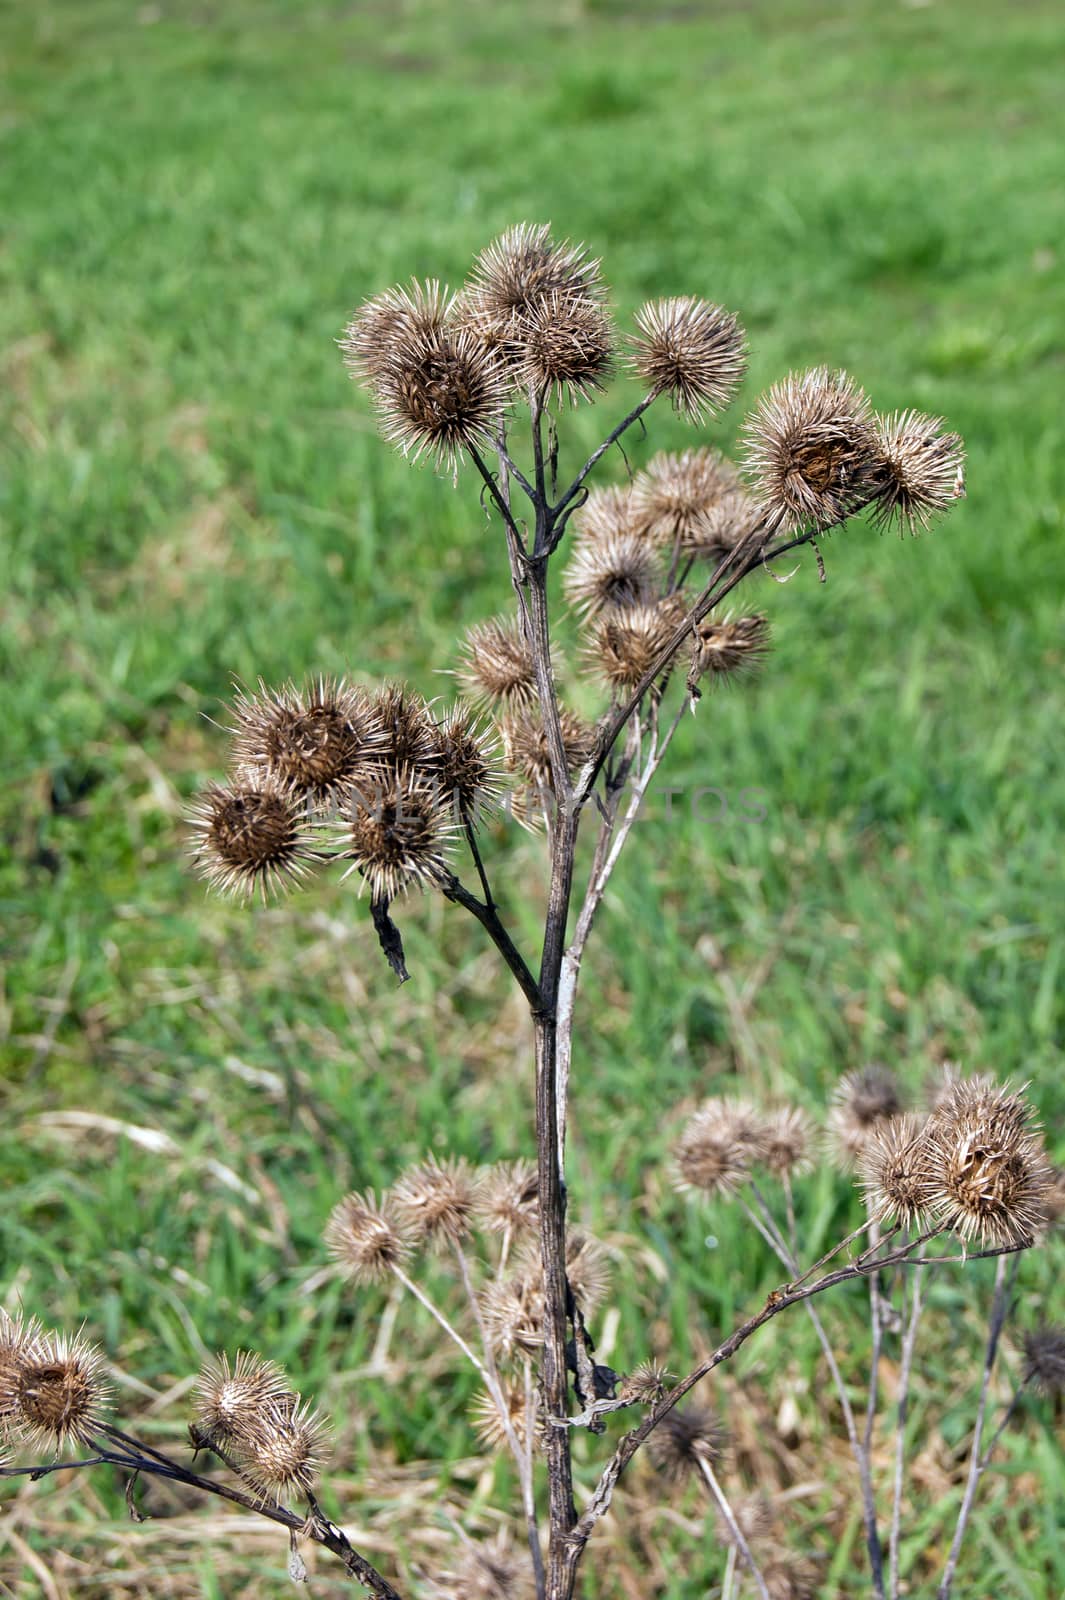 The acanthoides Carduus L. - roadside thistle seeds mature.